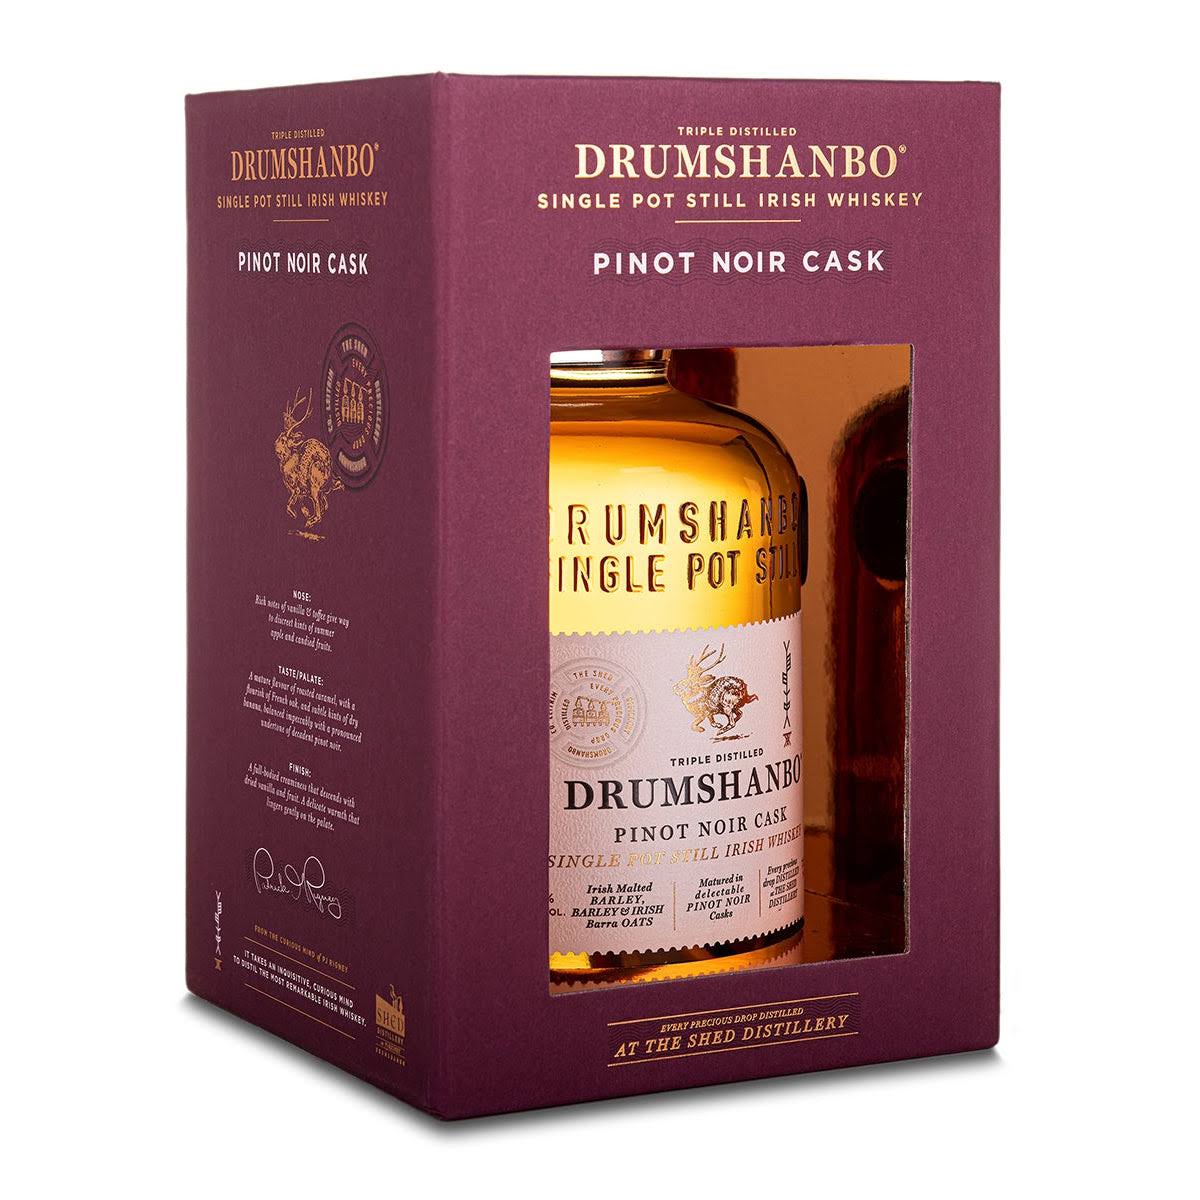 Drumshanbo Pinot Noir Cask Single Pot Still Irish Whiskey 43% Vol. 0,7l in Giftbox